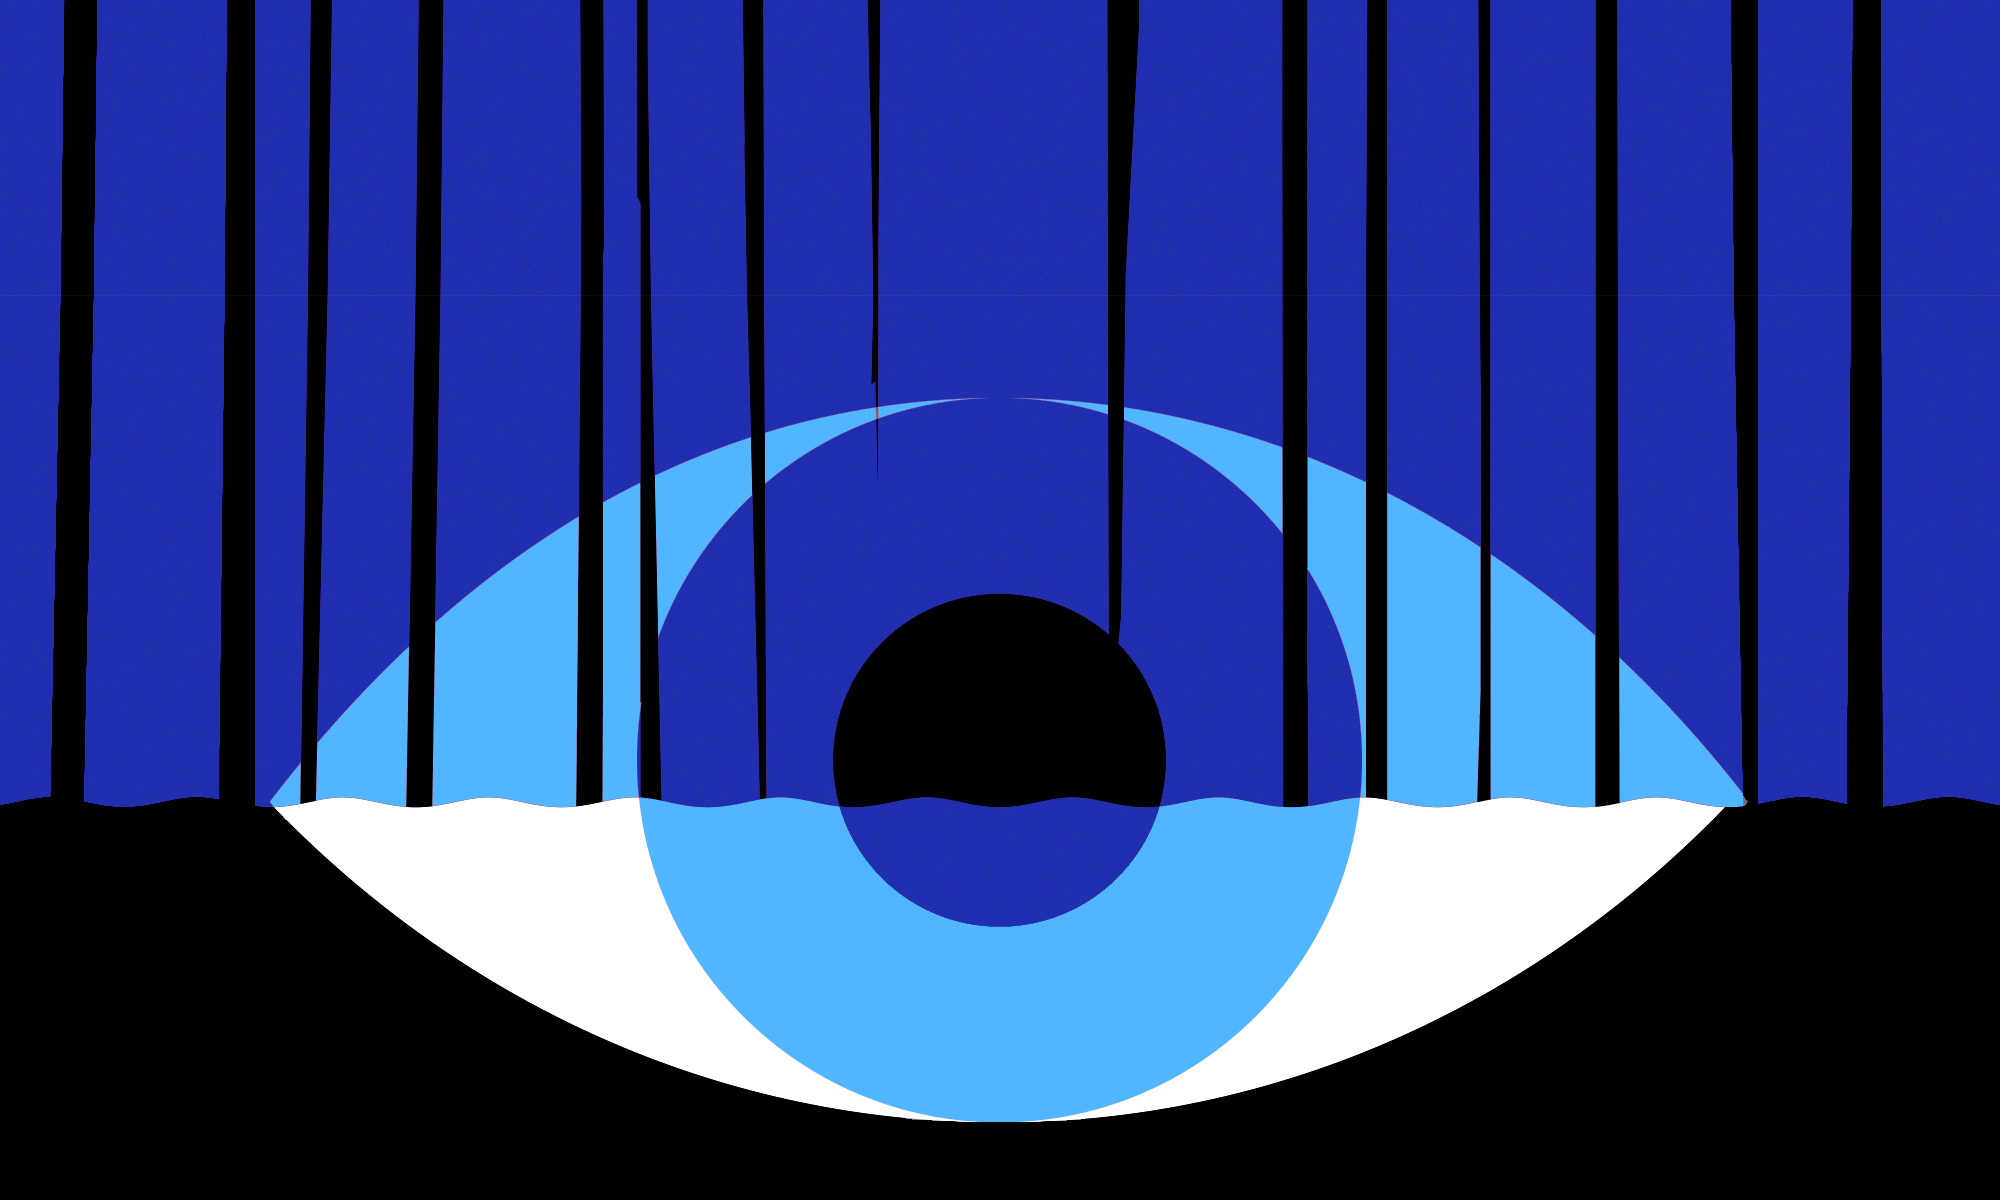 an illustration of a blue eye